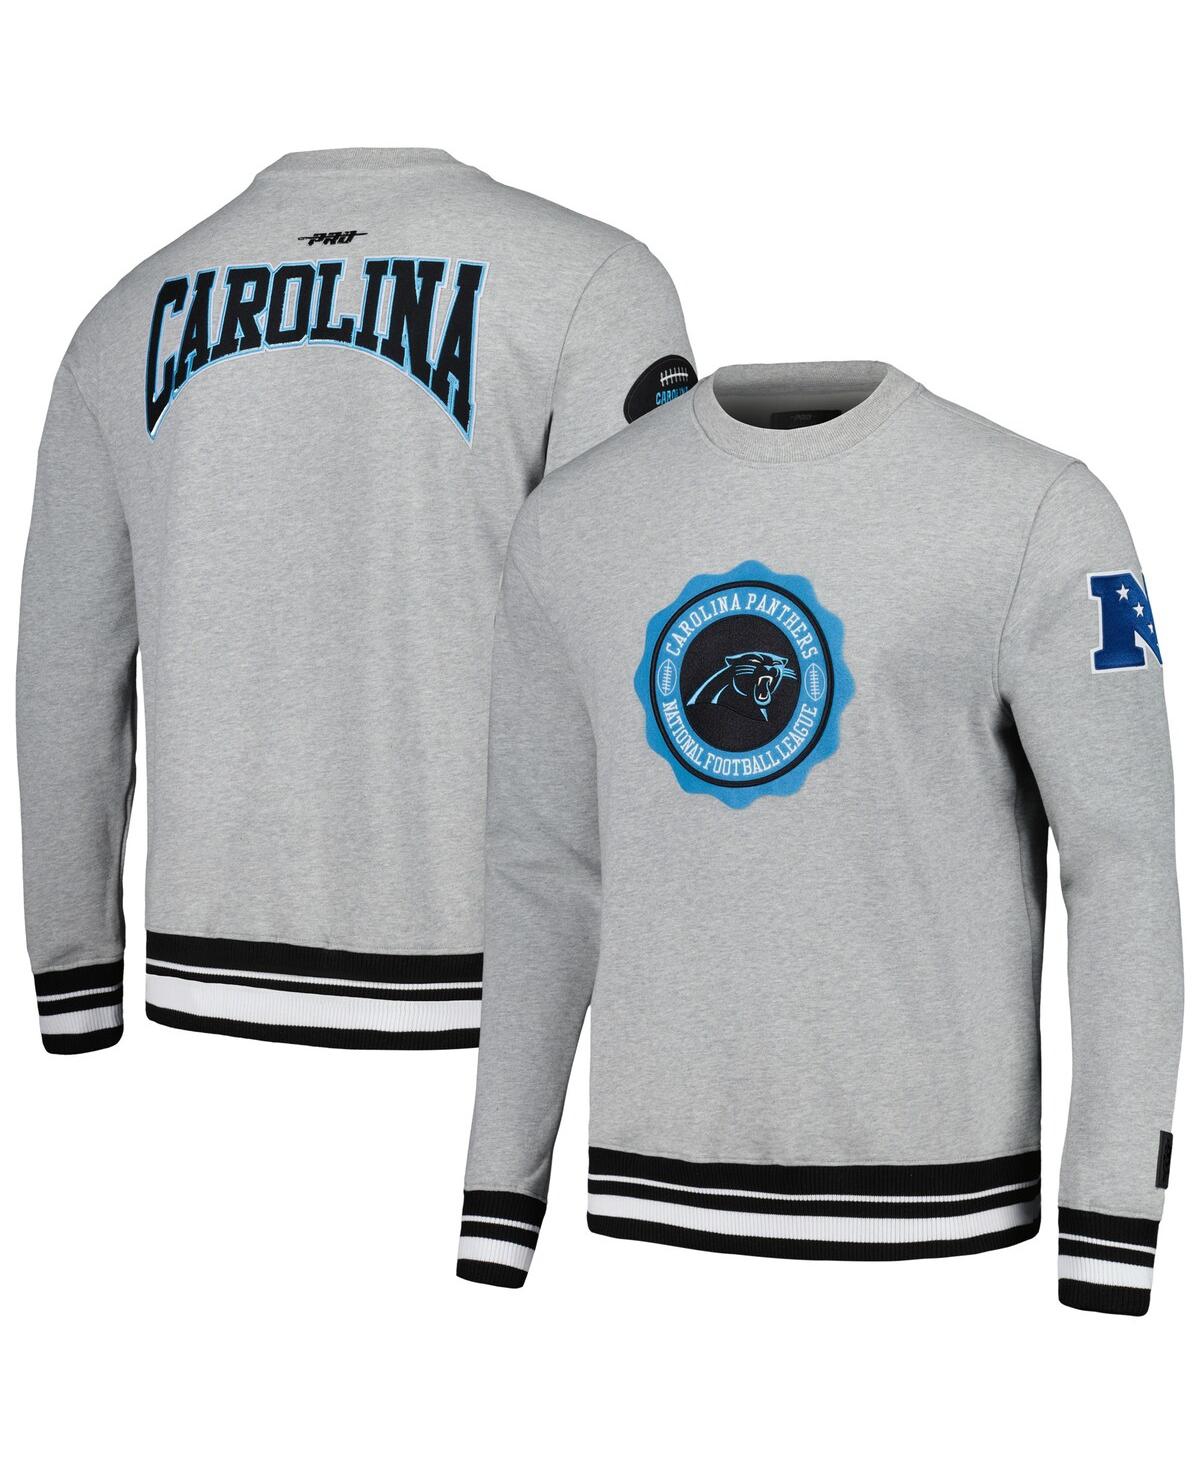 Shop Pro Standard Men's  Heather Gray Carolina Panthers Crest Emblem Pullover Sweatshirt